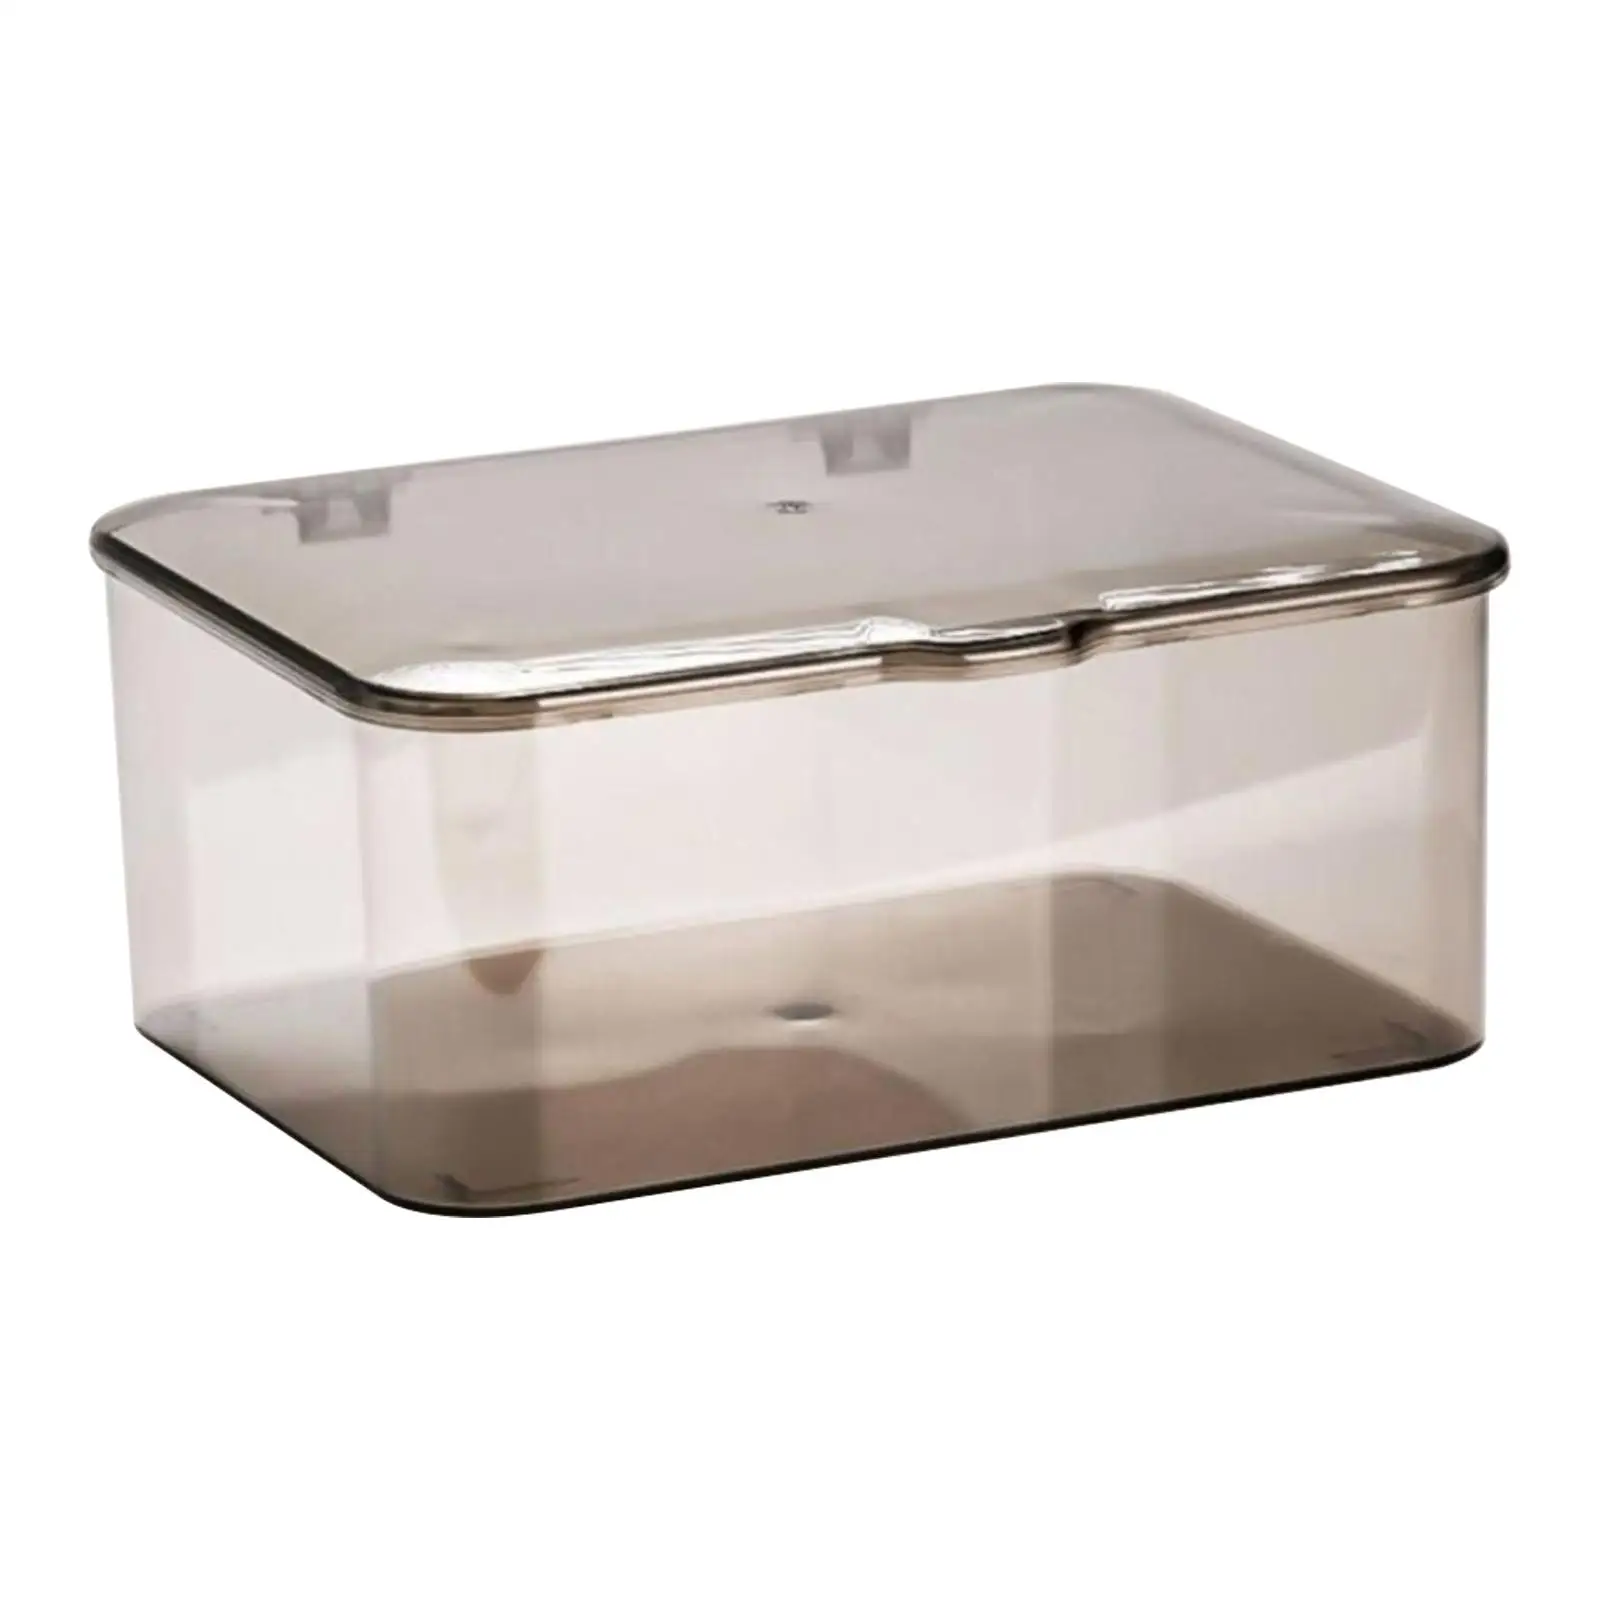 Tea Set Storage Box with Lids Tea Milk Bags Storage Holder Container Desktop Organizer for Bathroom Dining Room Kitchen Desk